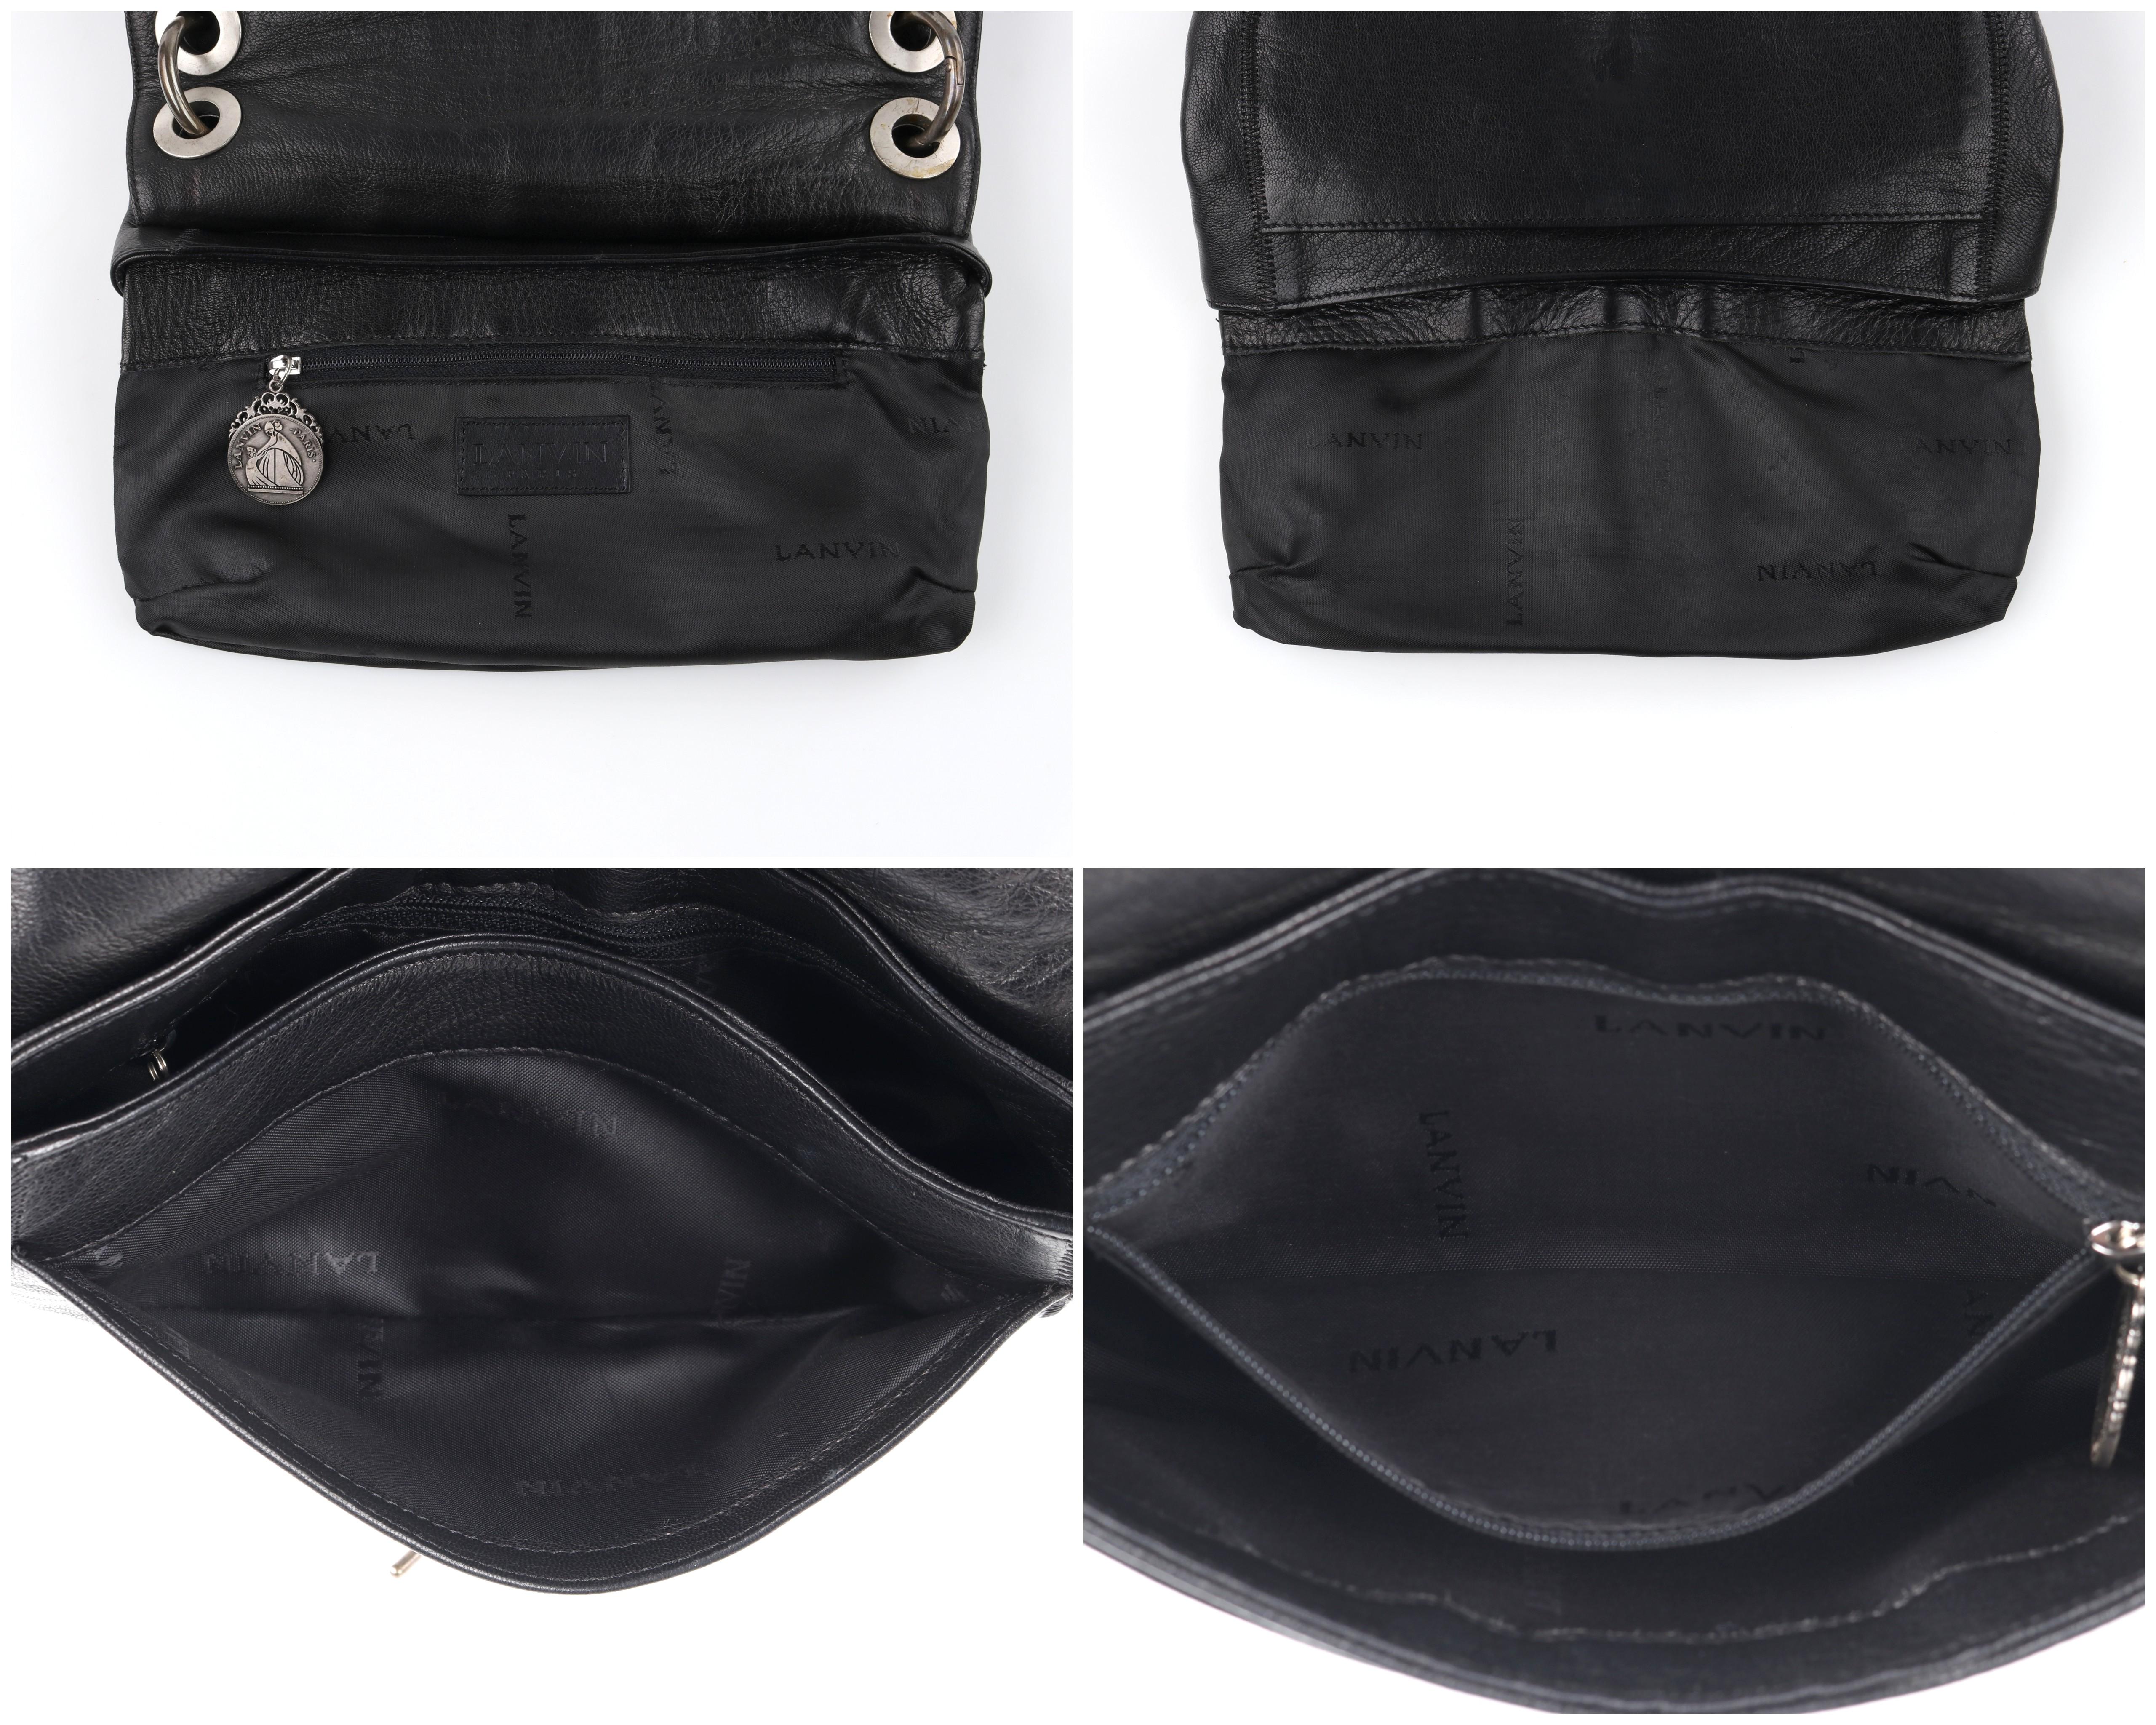 LANVIN “Jeanne” Black Leather Braided Pom Pom Tassel Strap Flap Clutch Handbag  2